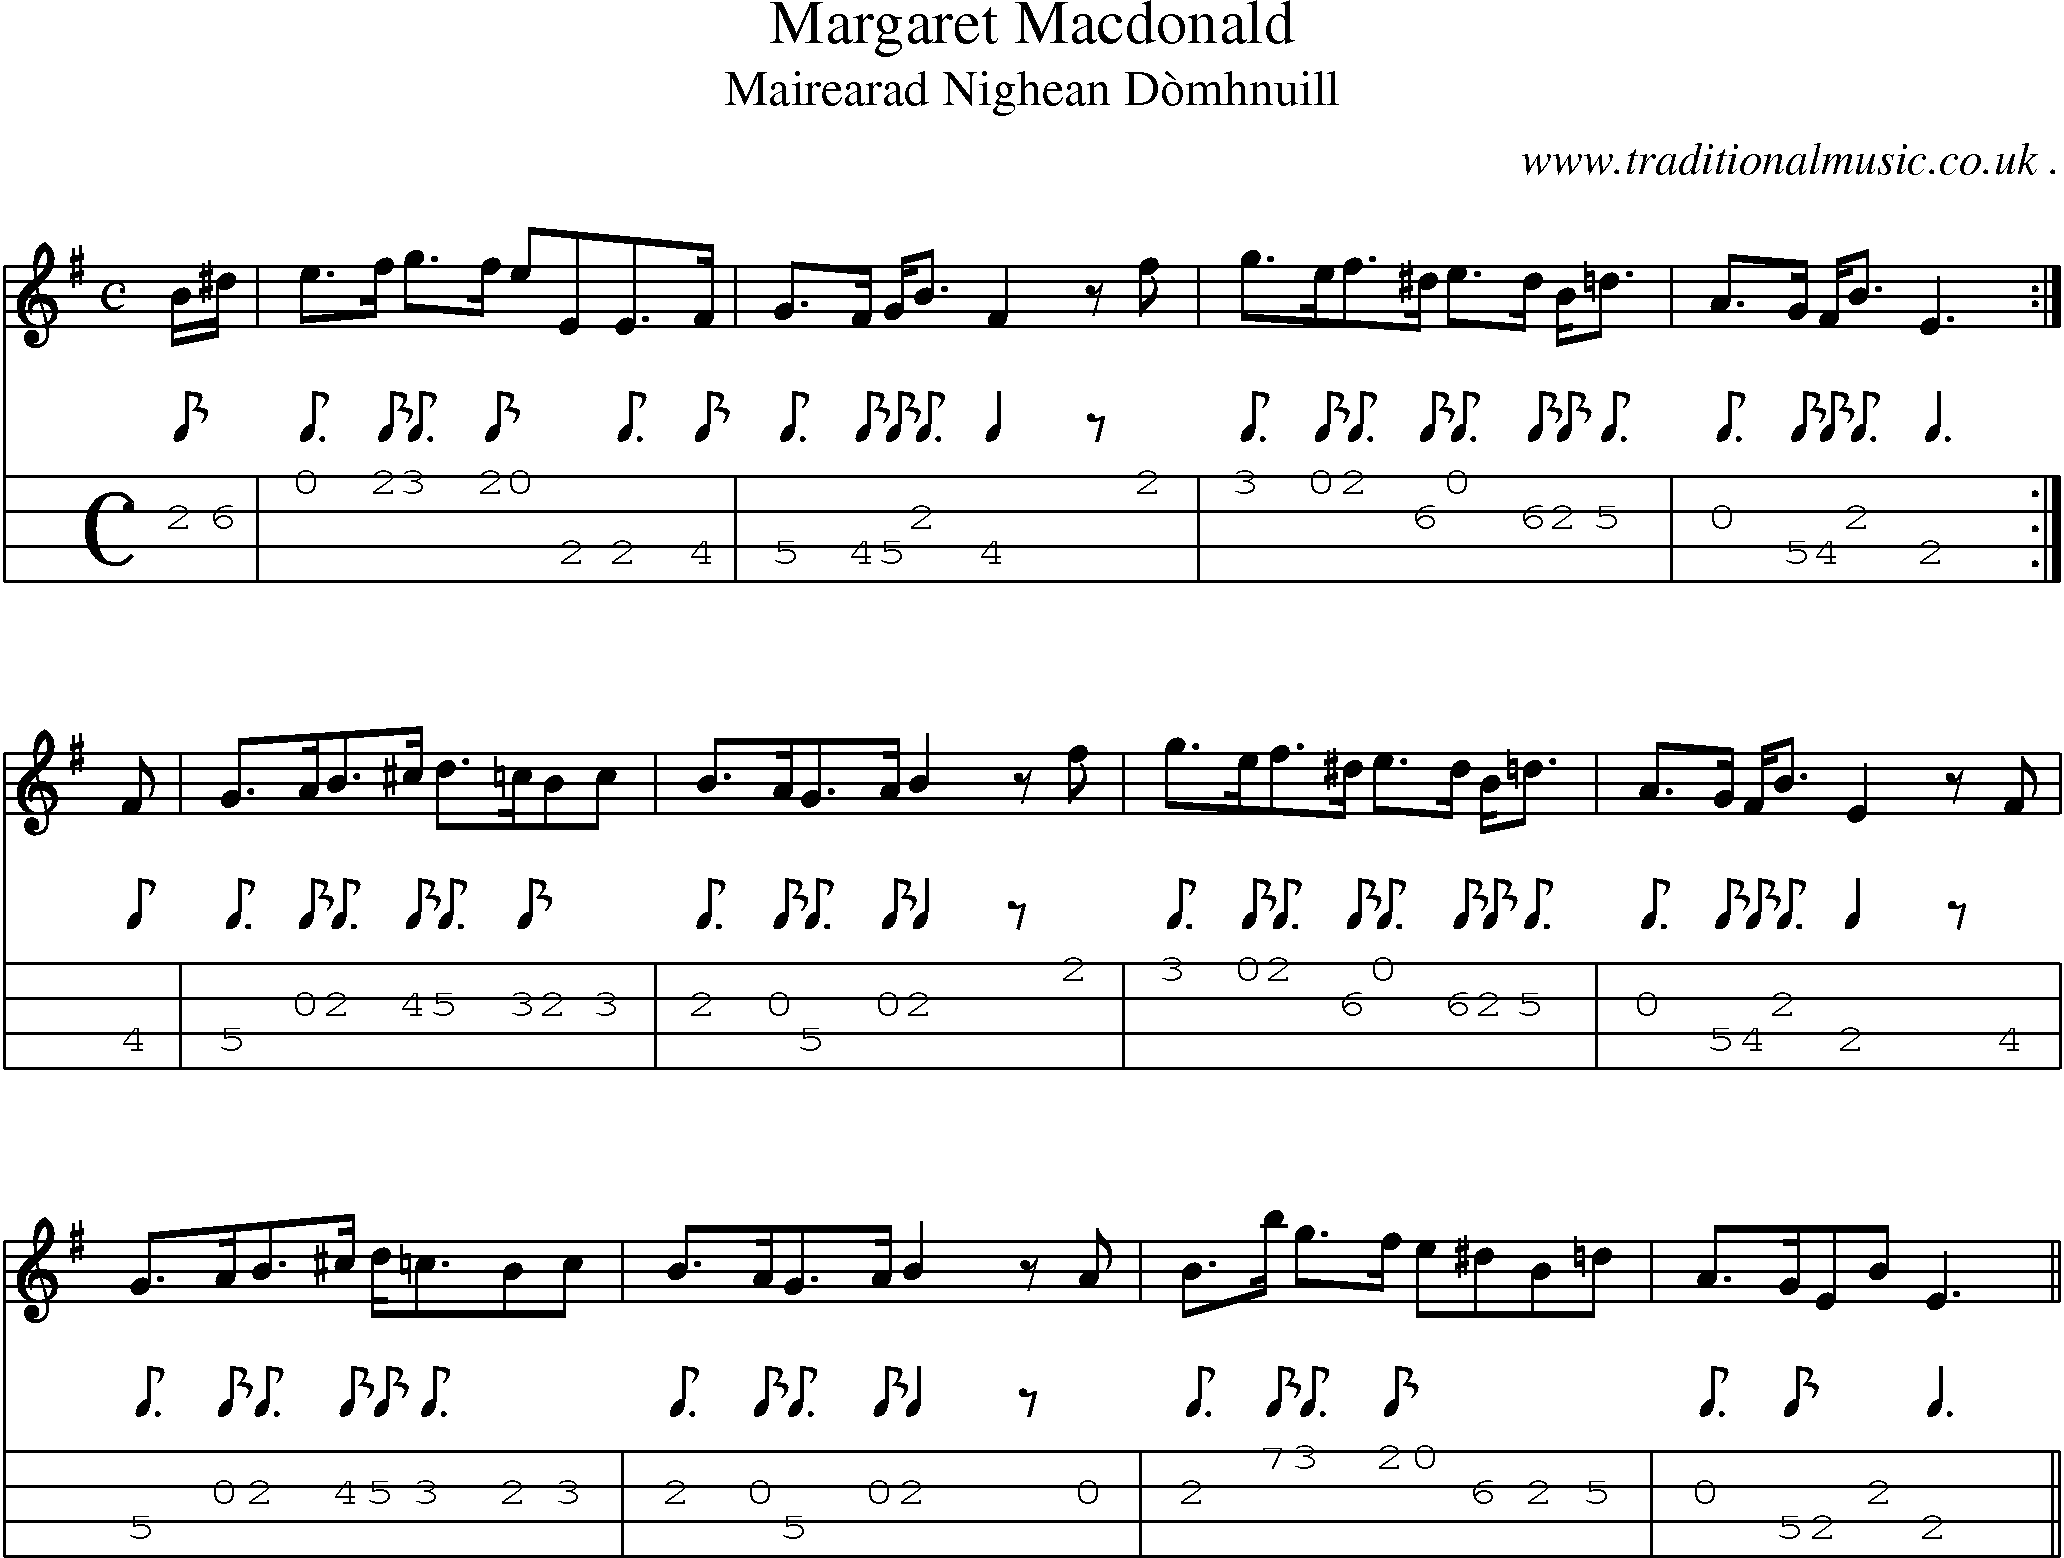 Sheet-music  score, Chords and Mandolin Tabs for Margaret Macdonald